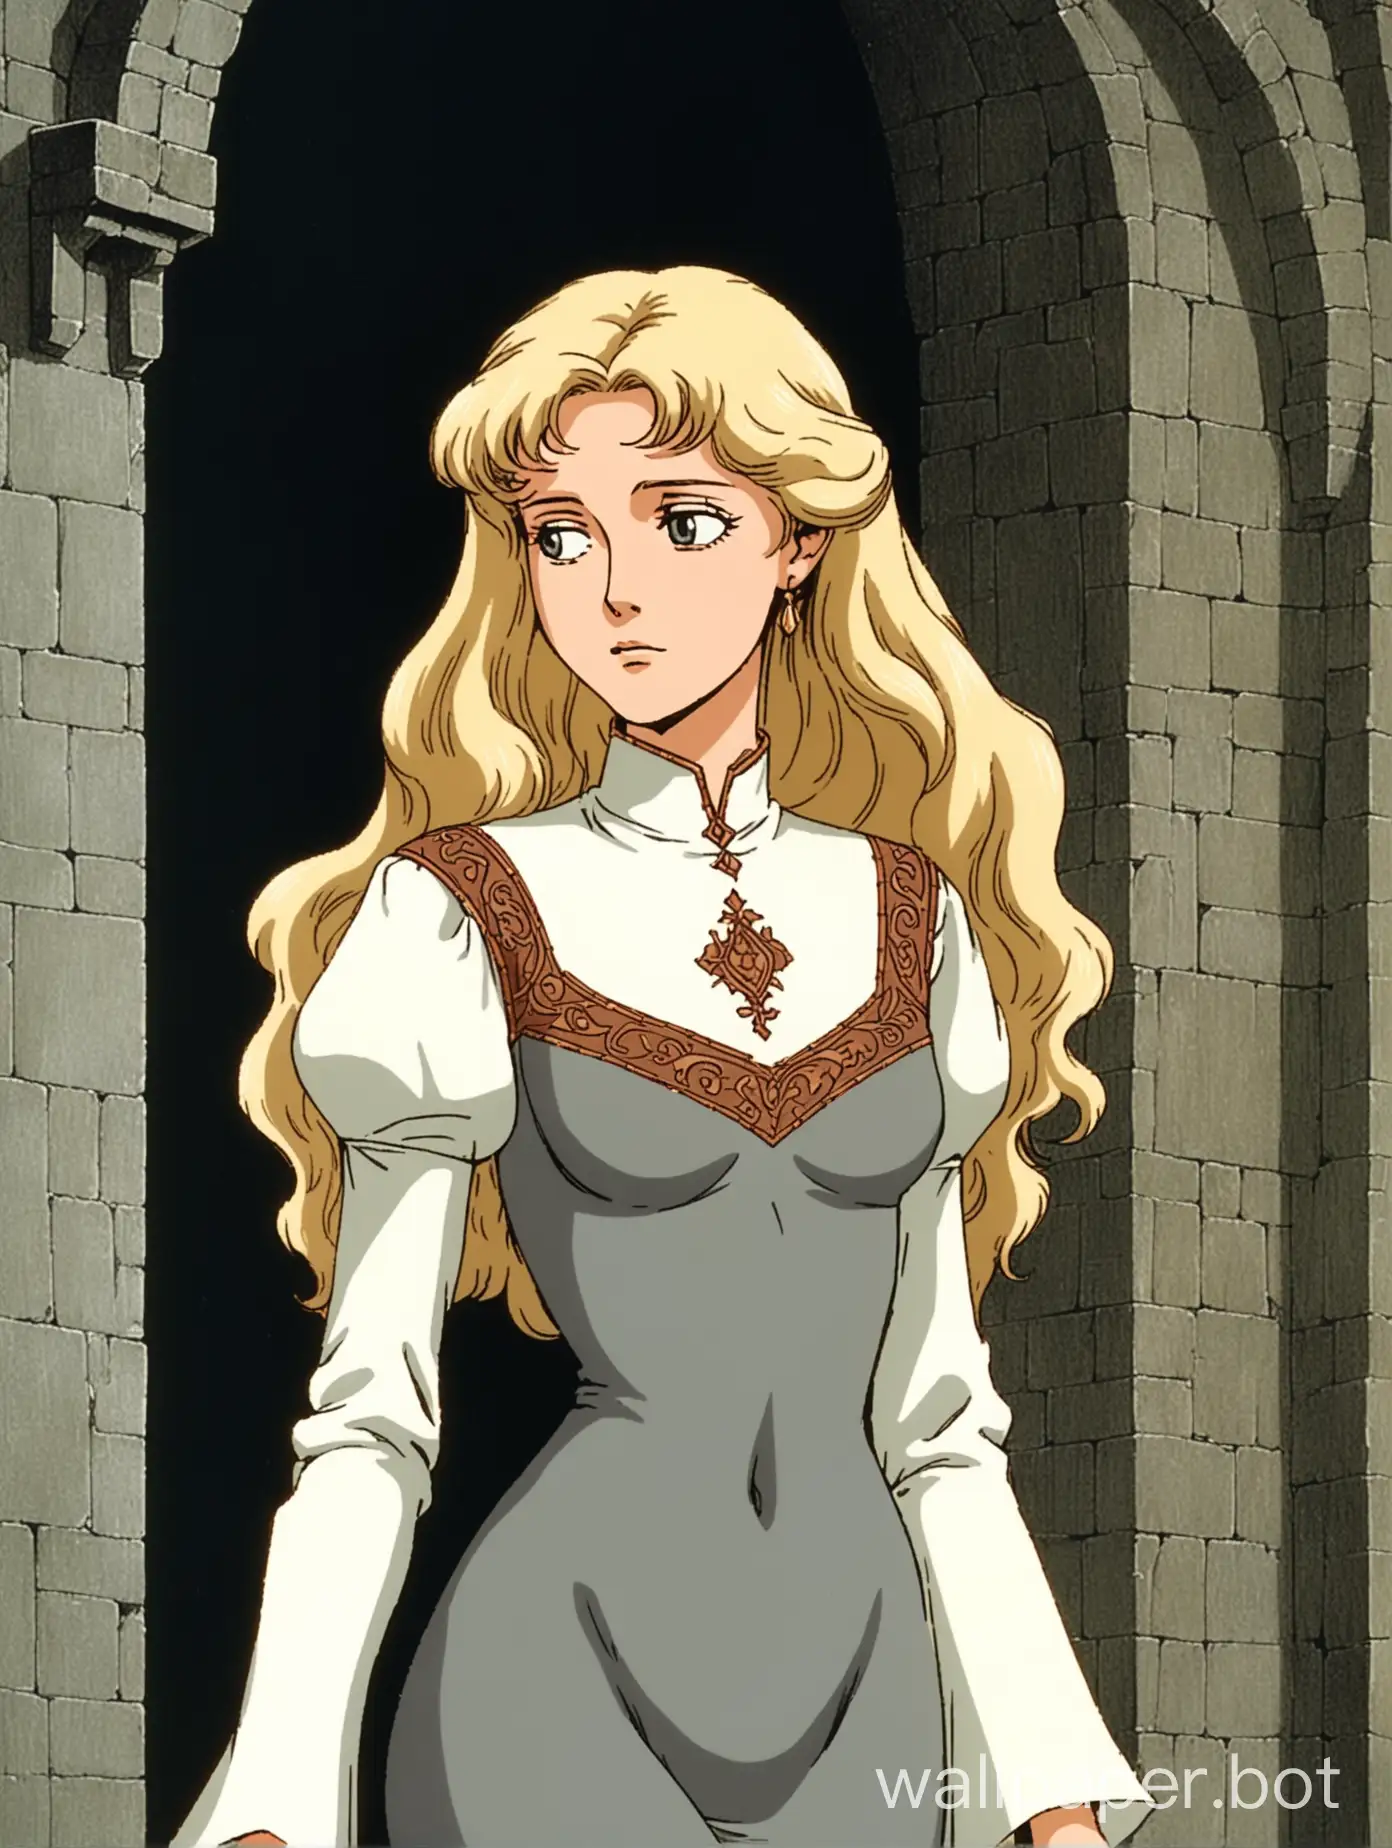 Elegant-Shy-Woman-with-Long-WhiteBlonde-Hair-in-MedievalInspired-Dress